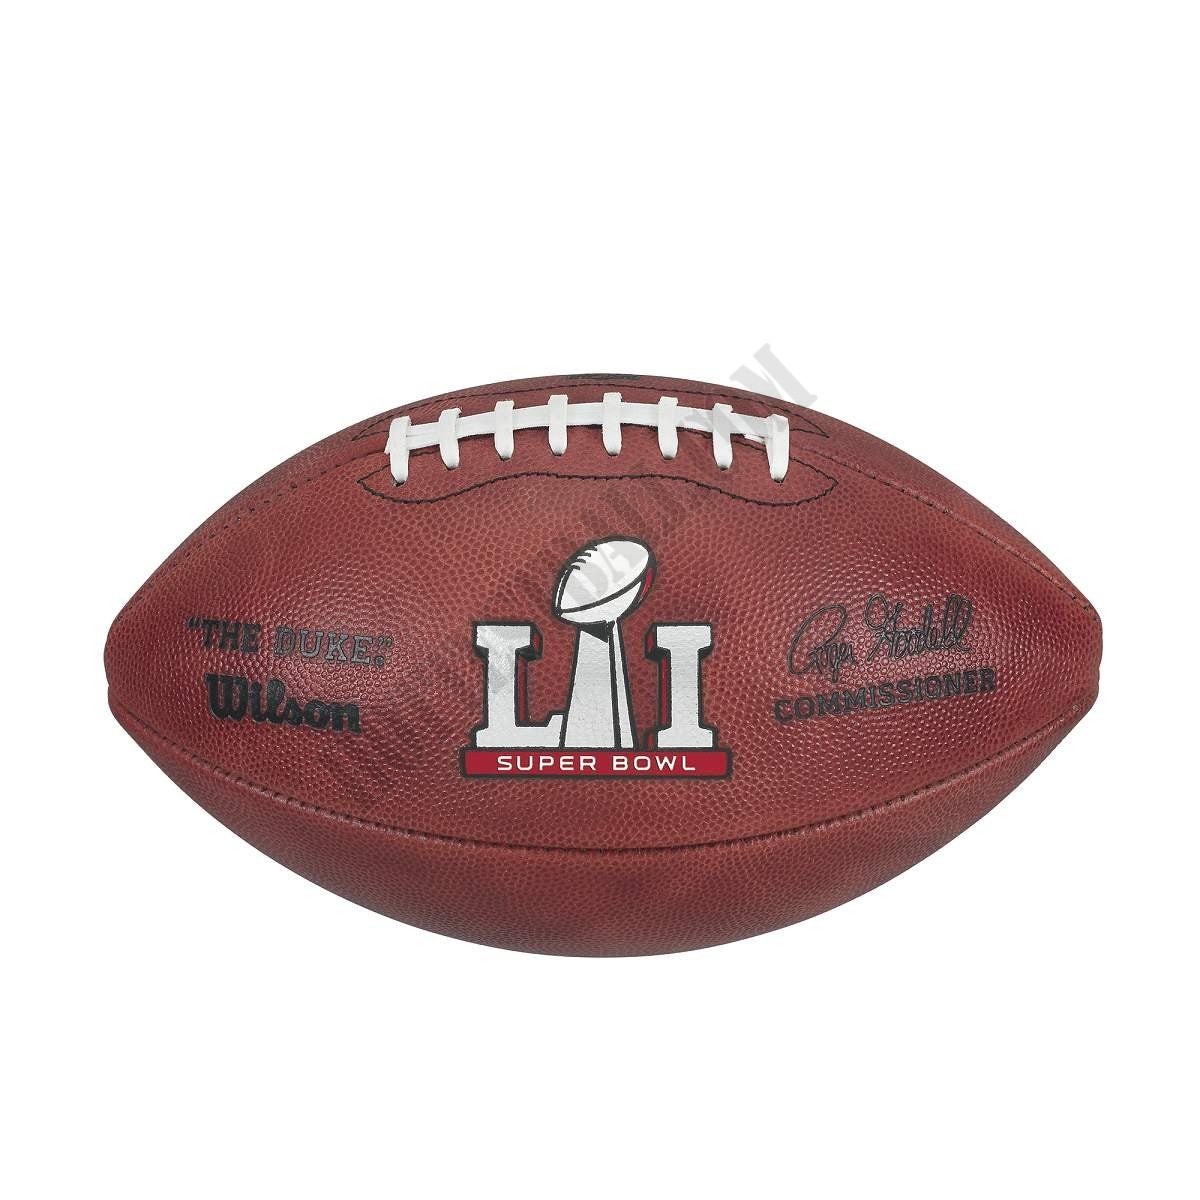 Super Bowl LI Game Football - New England Patriots ● Wilson Promotions - Super Bowl LI Game Football - New England Patriots ● Wilson Promotions